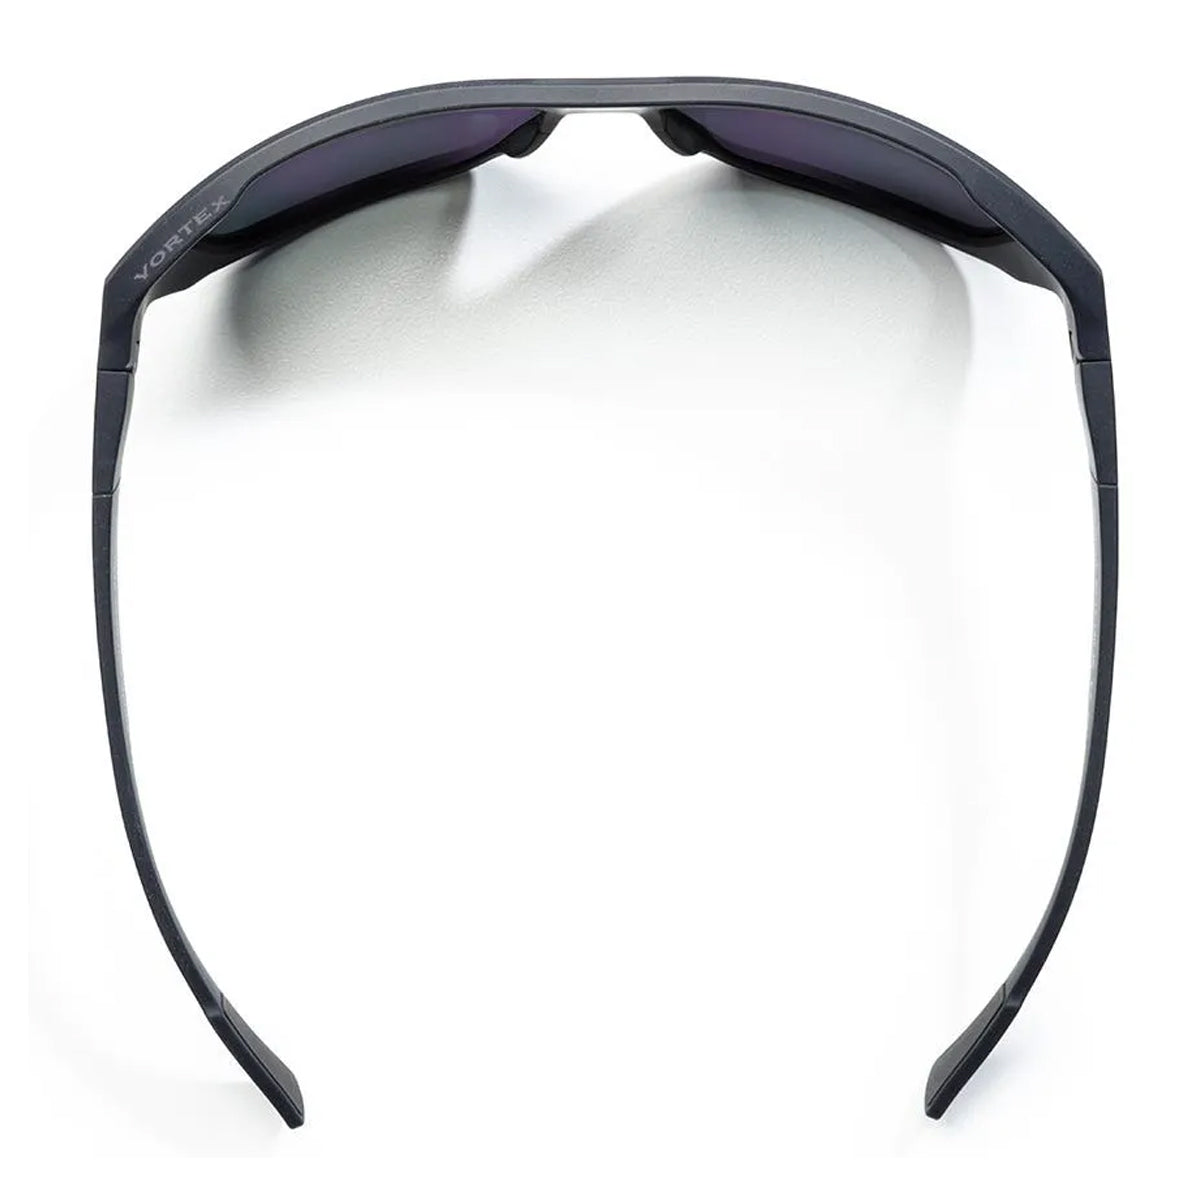 Vortex Men's Jackal Sunglasses in Blue & Smoke by GOHUNT | Vortex Optics - GOHUNT Shop